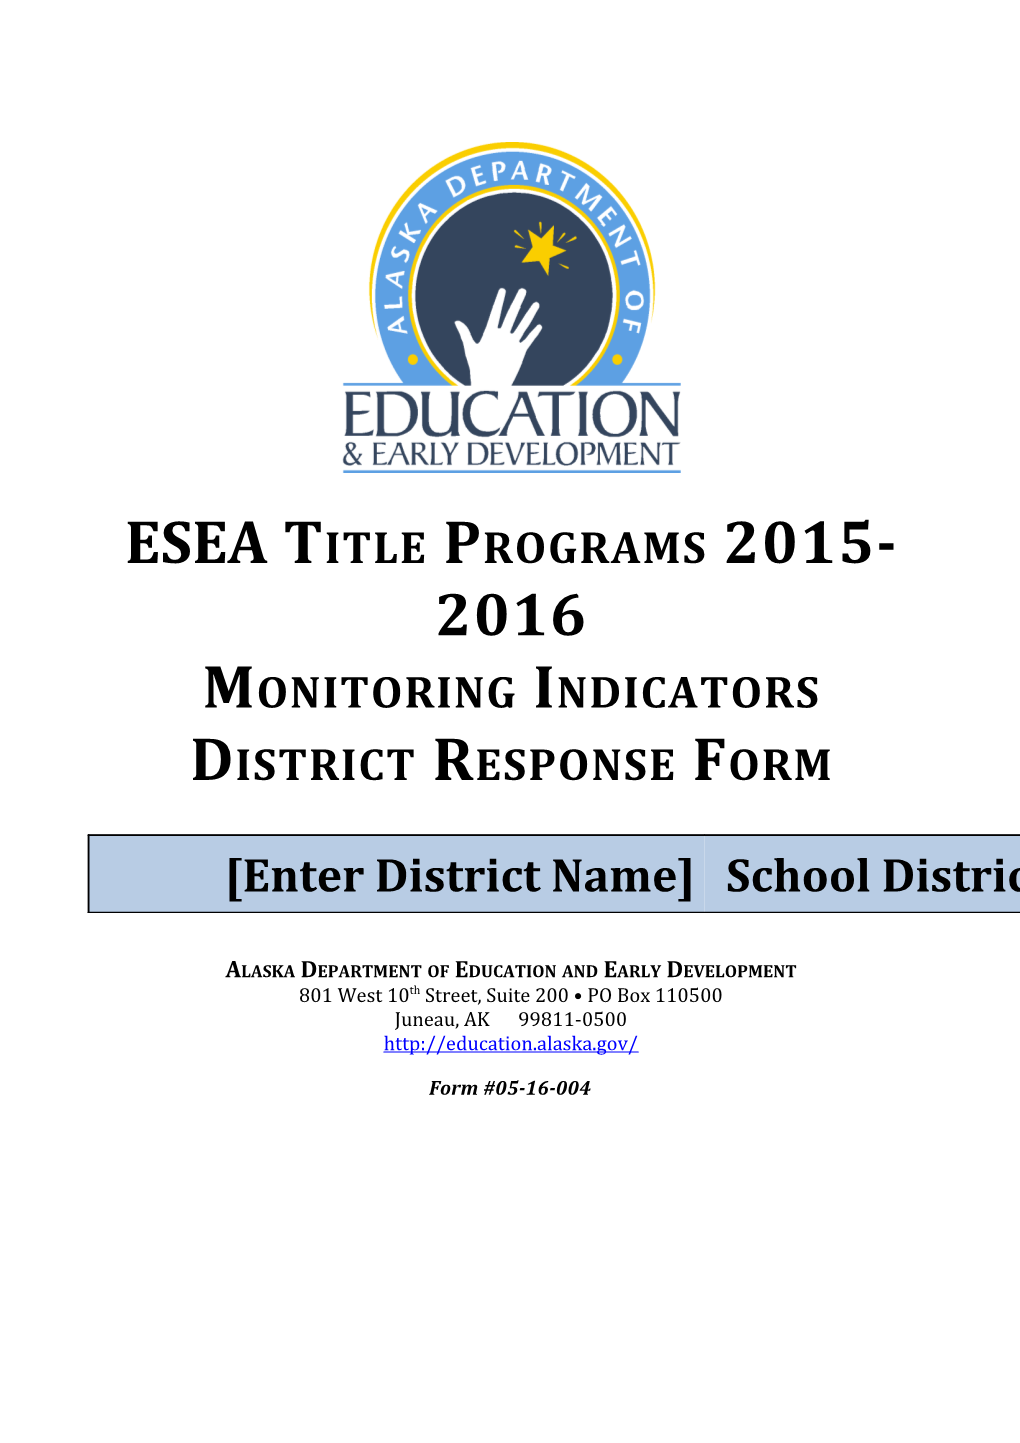 ESEA Title Programs 2015-2016